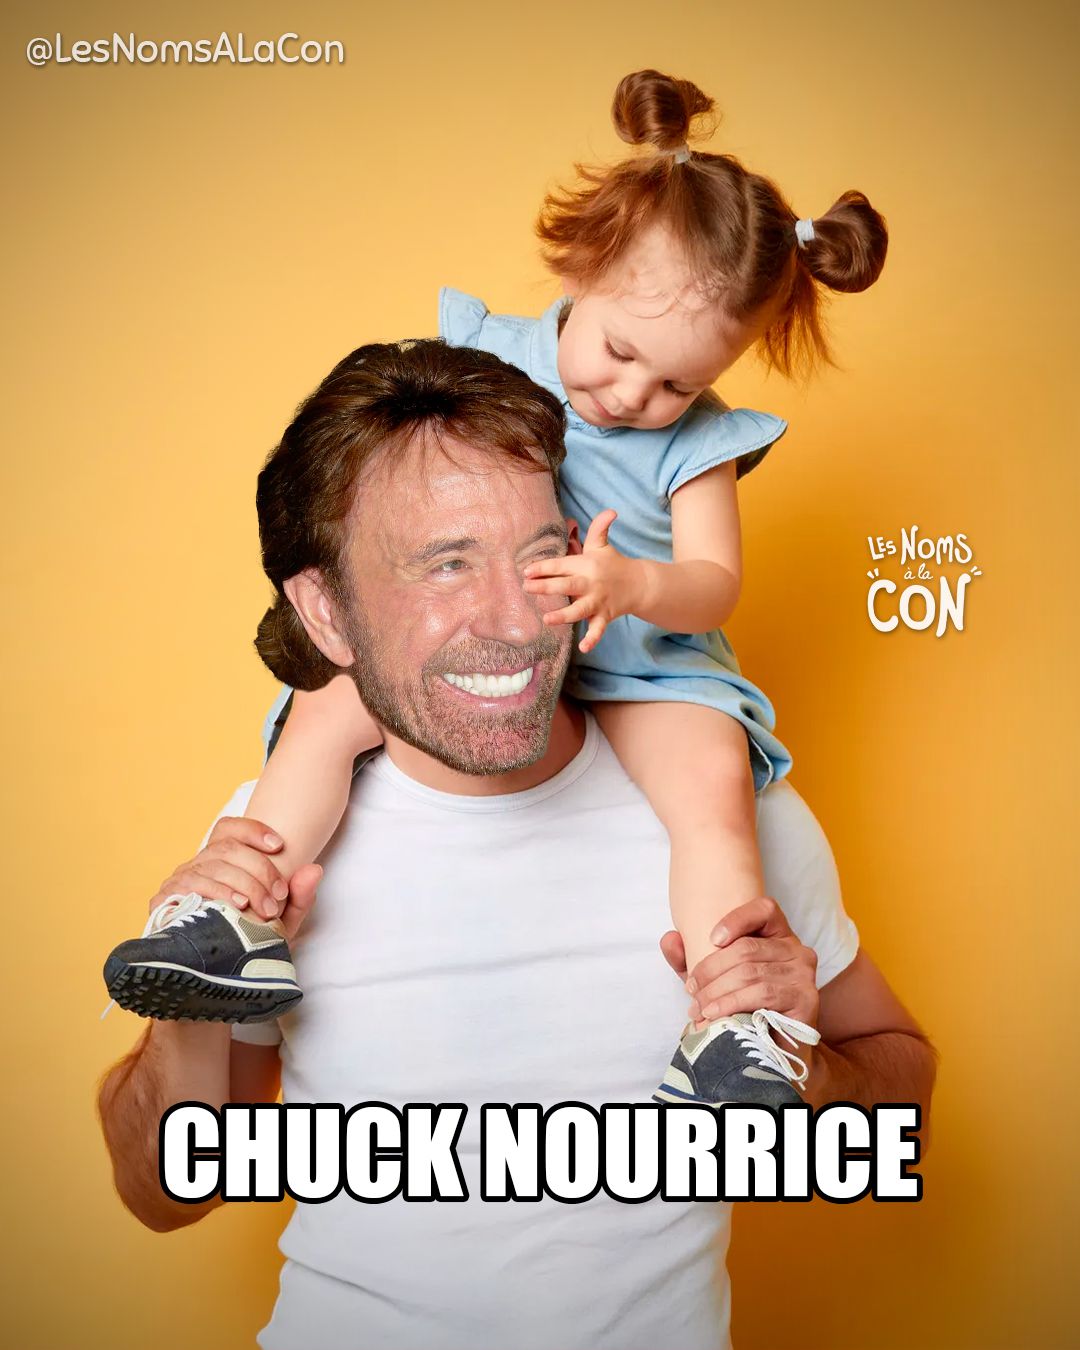 Chuck Nourrice